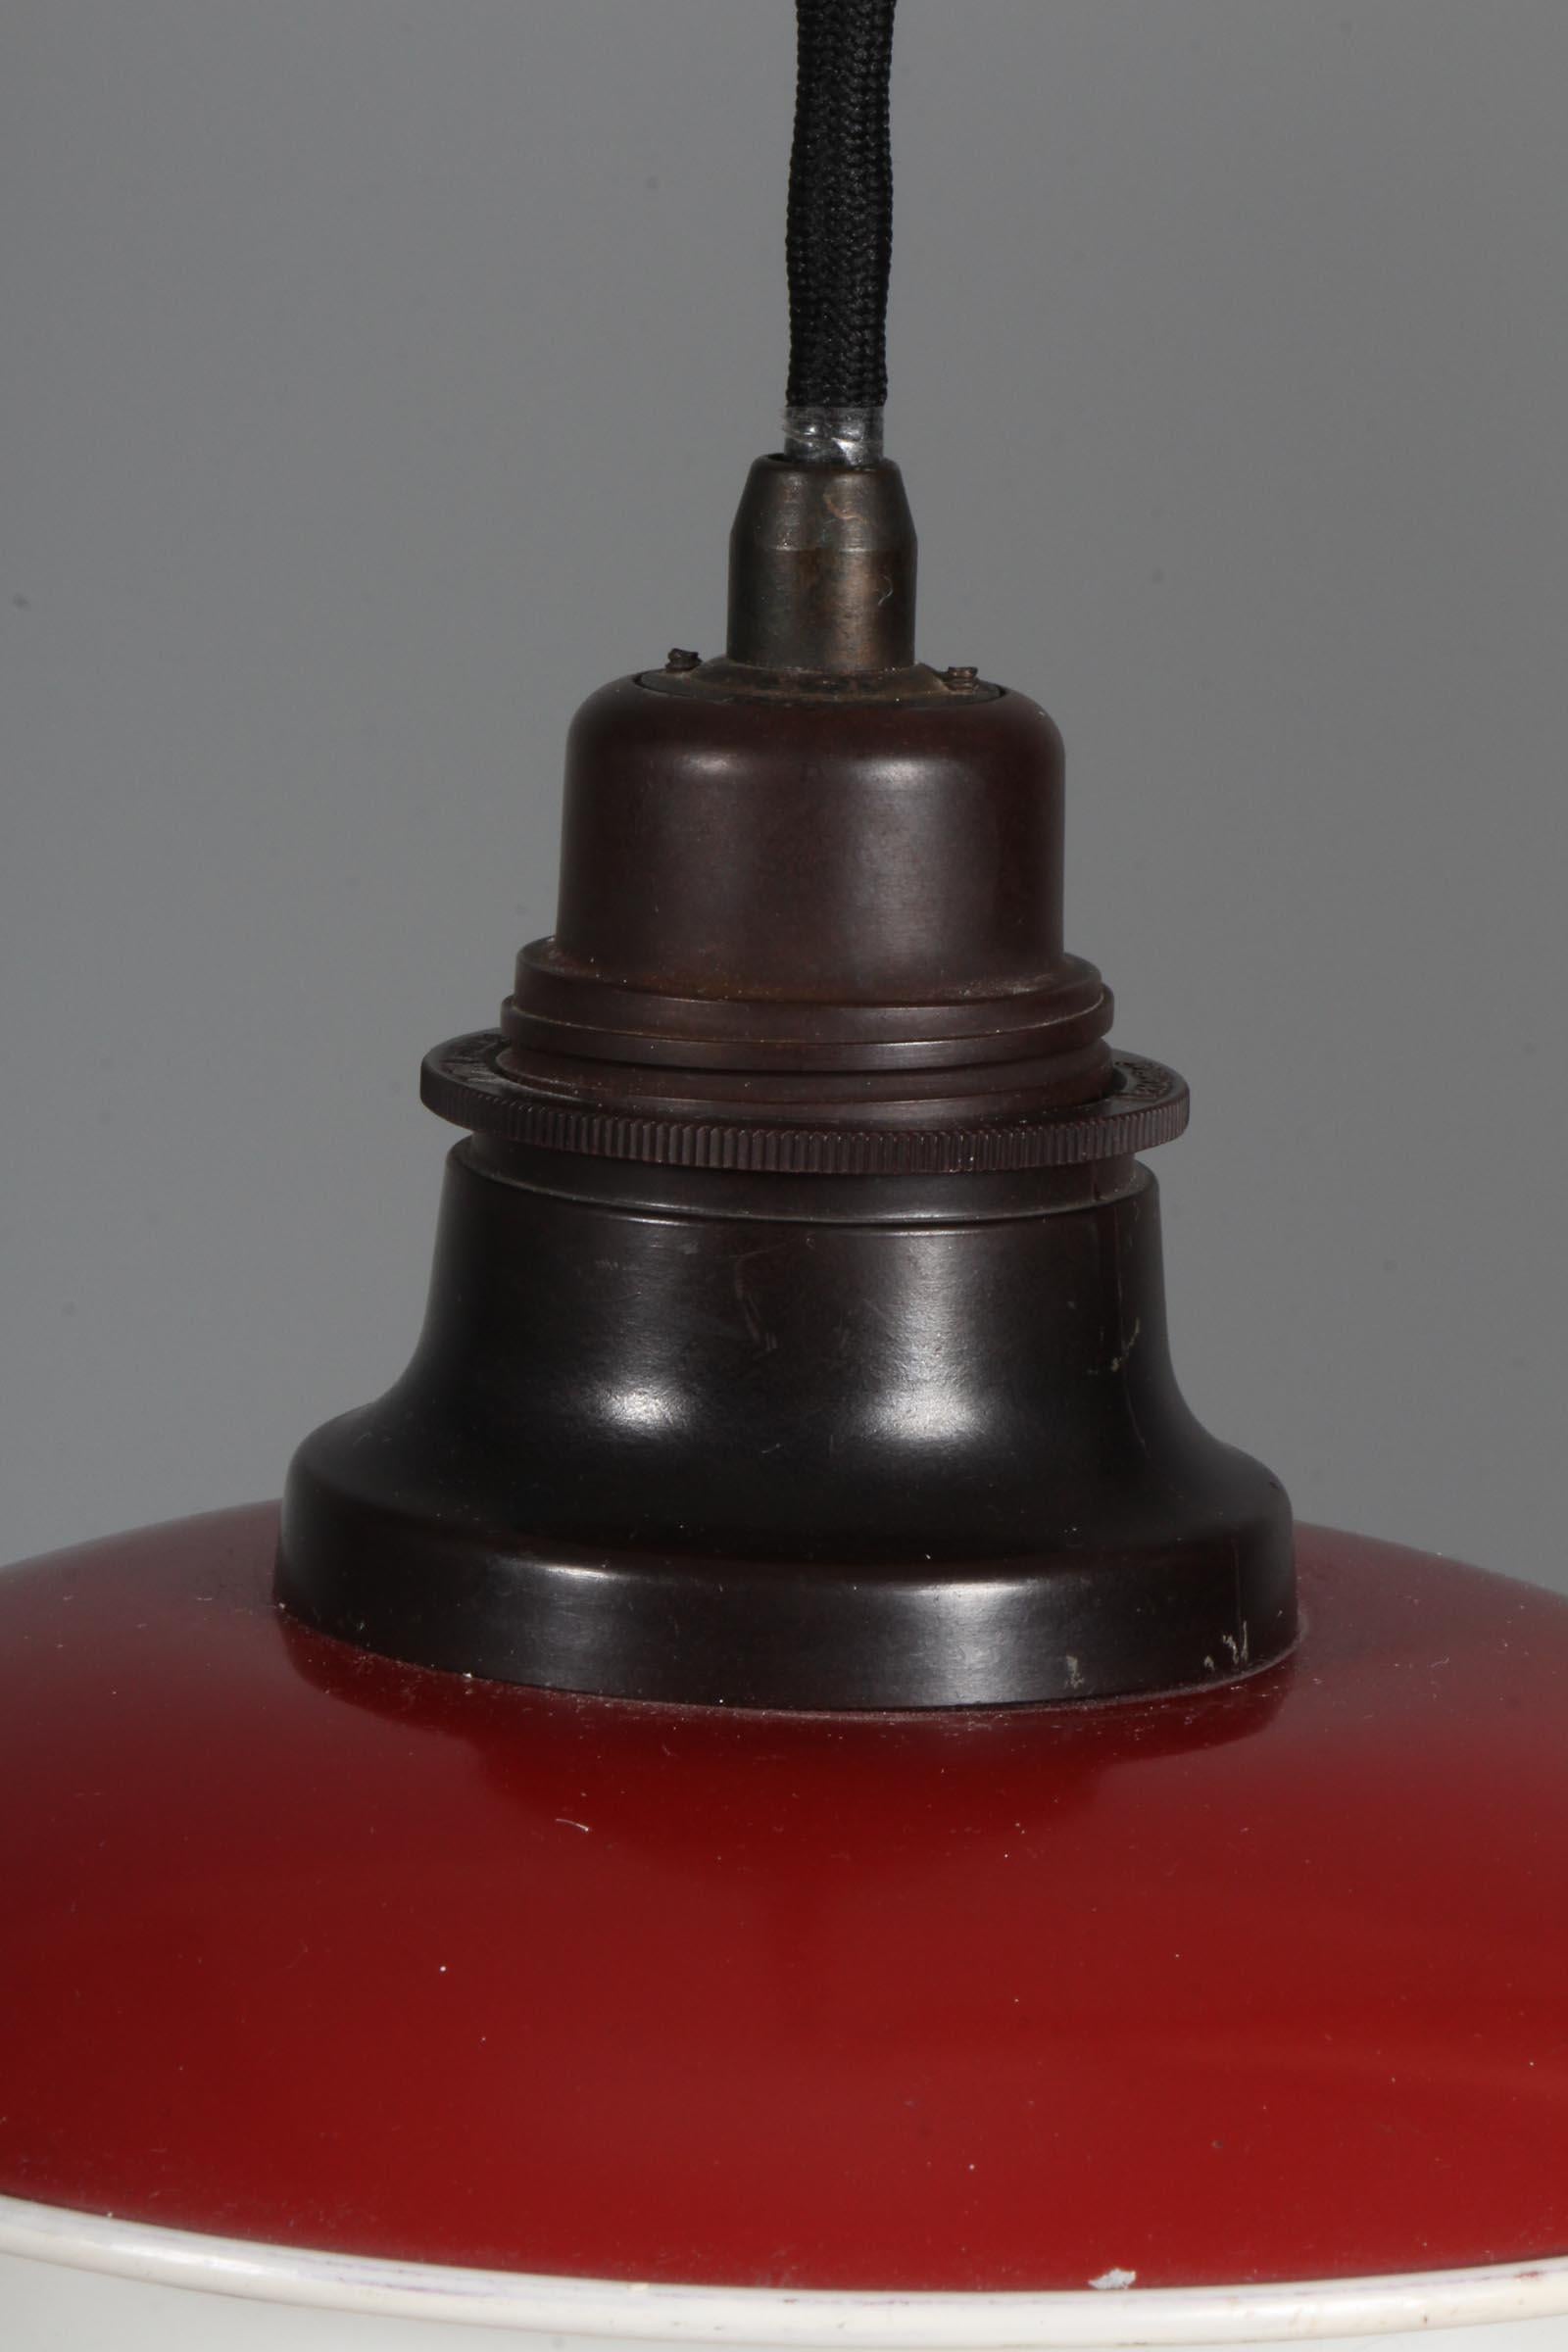 Danish Poul Henningsen 3/2 Table Lamp of Patinated Brass, Pat. Appl. 1926-1928, Denmark For Sale